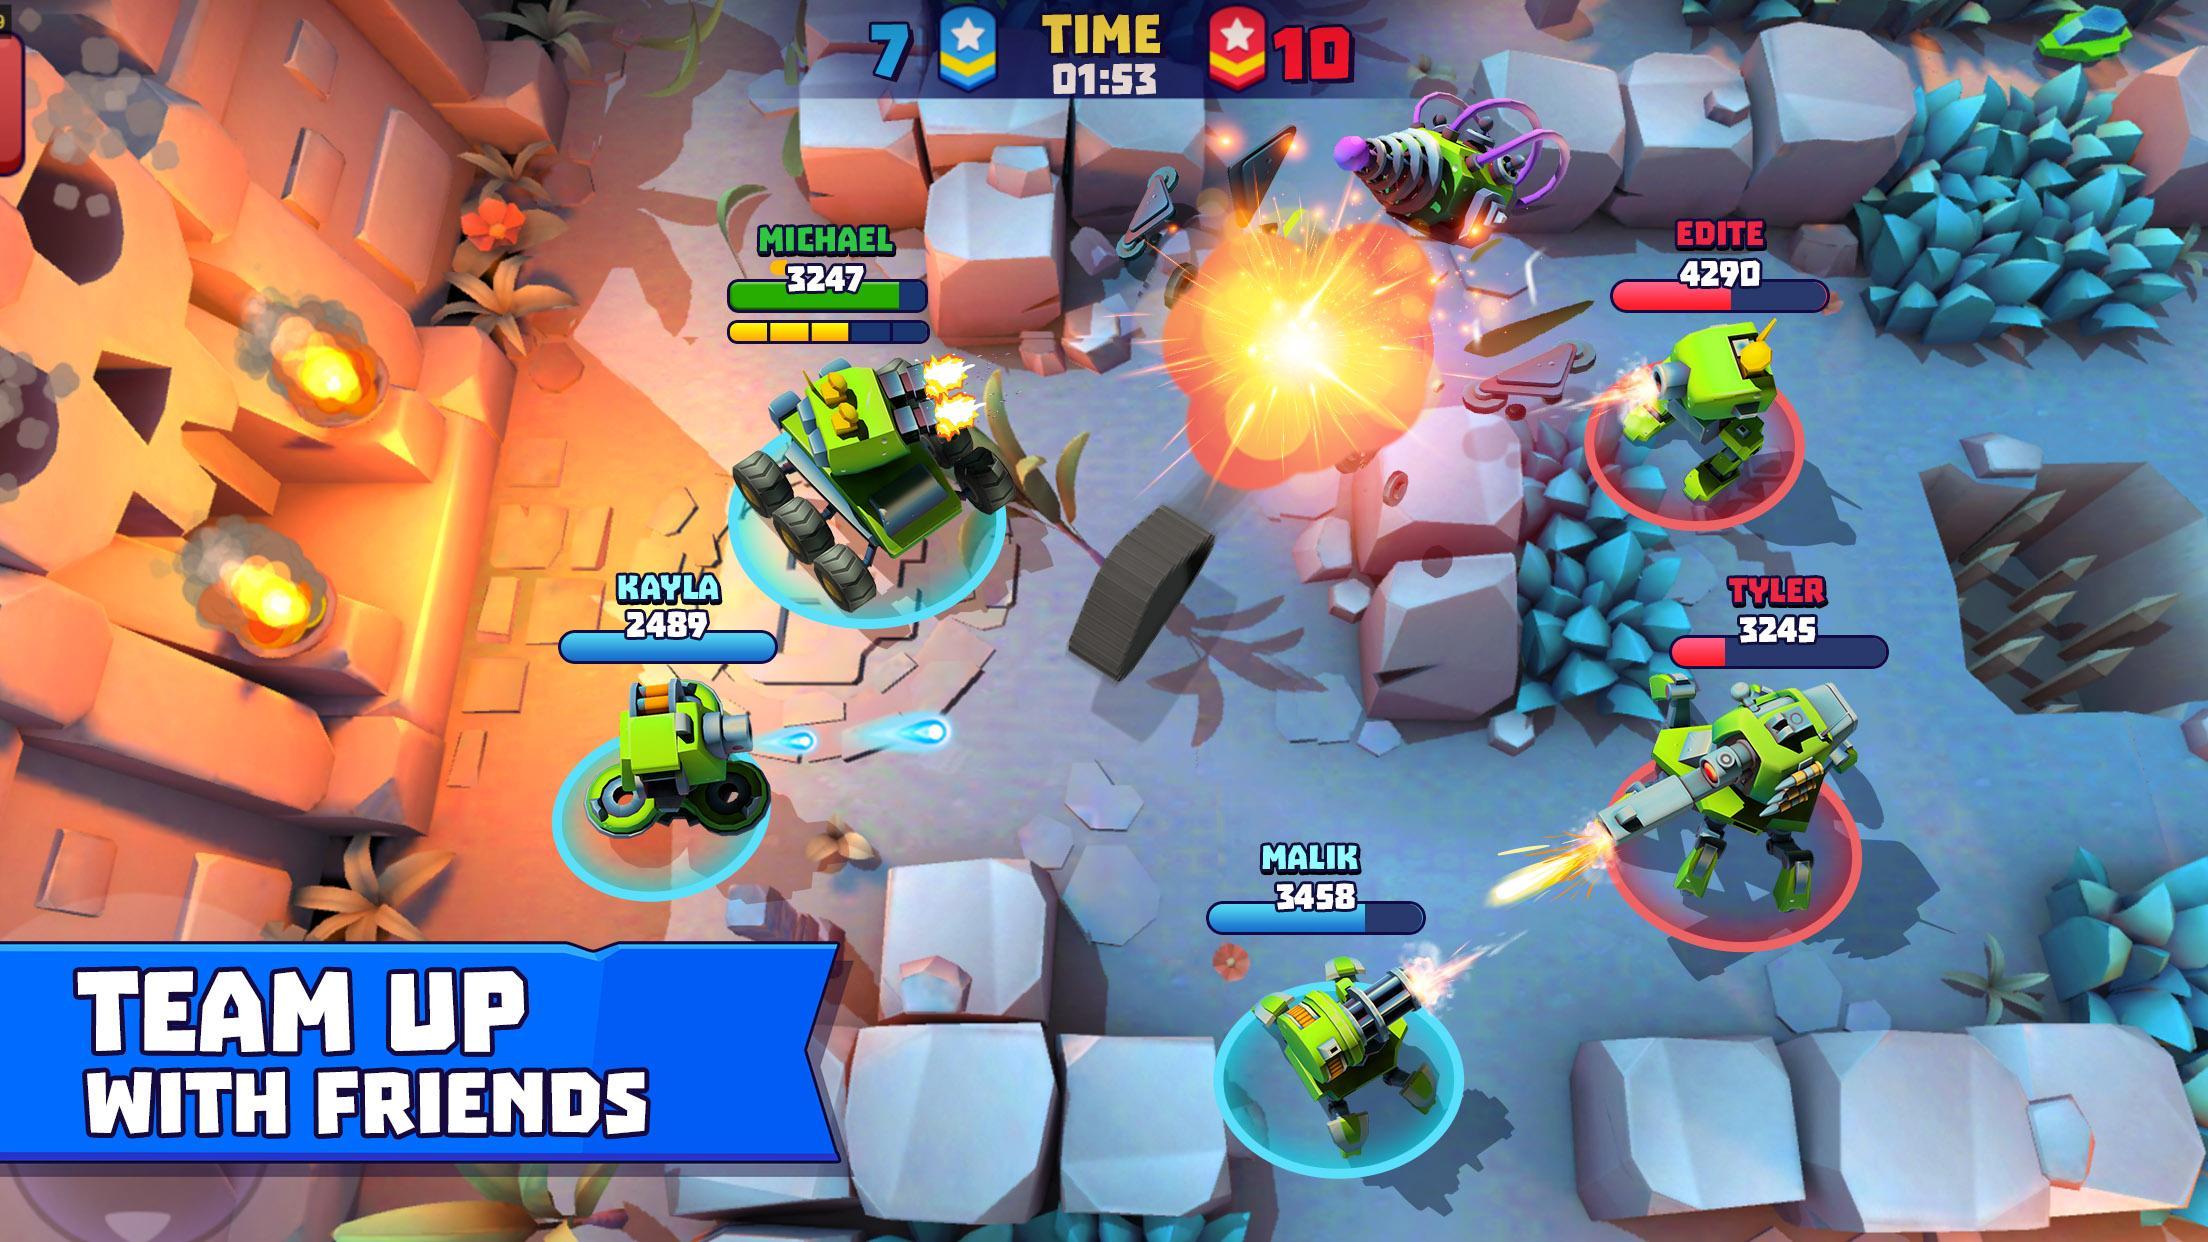 Tanks A Lot! - Realtime Multiplayer Battle Arena 2.56 Screenshot 3